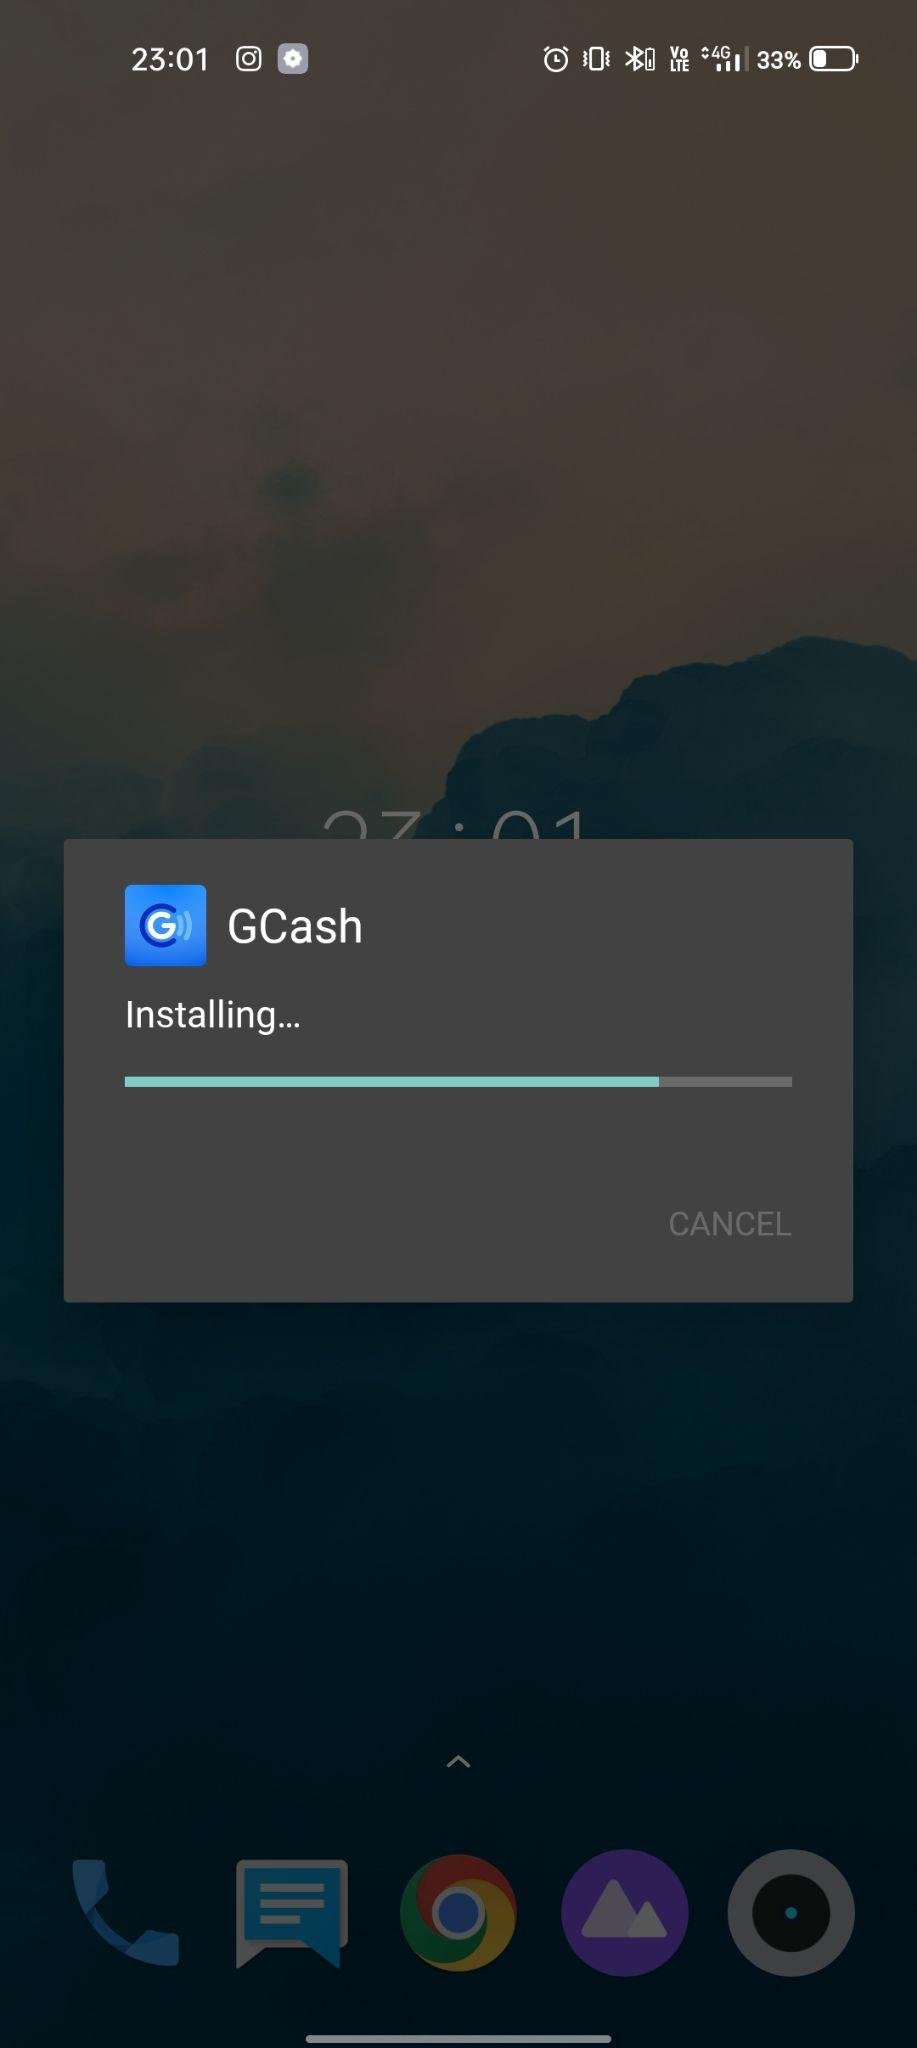 gcash apk installing